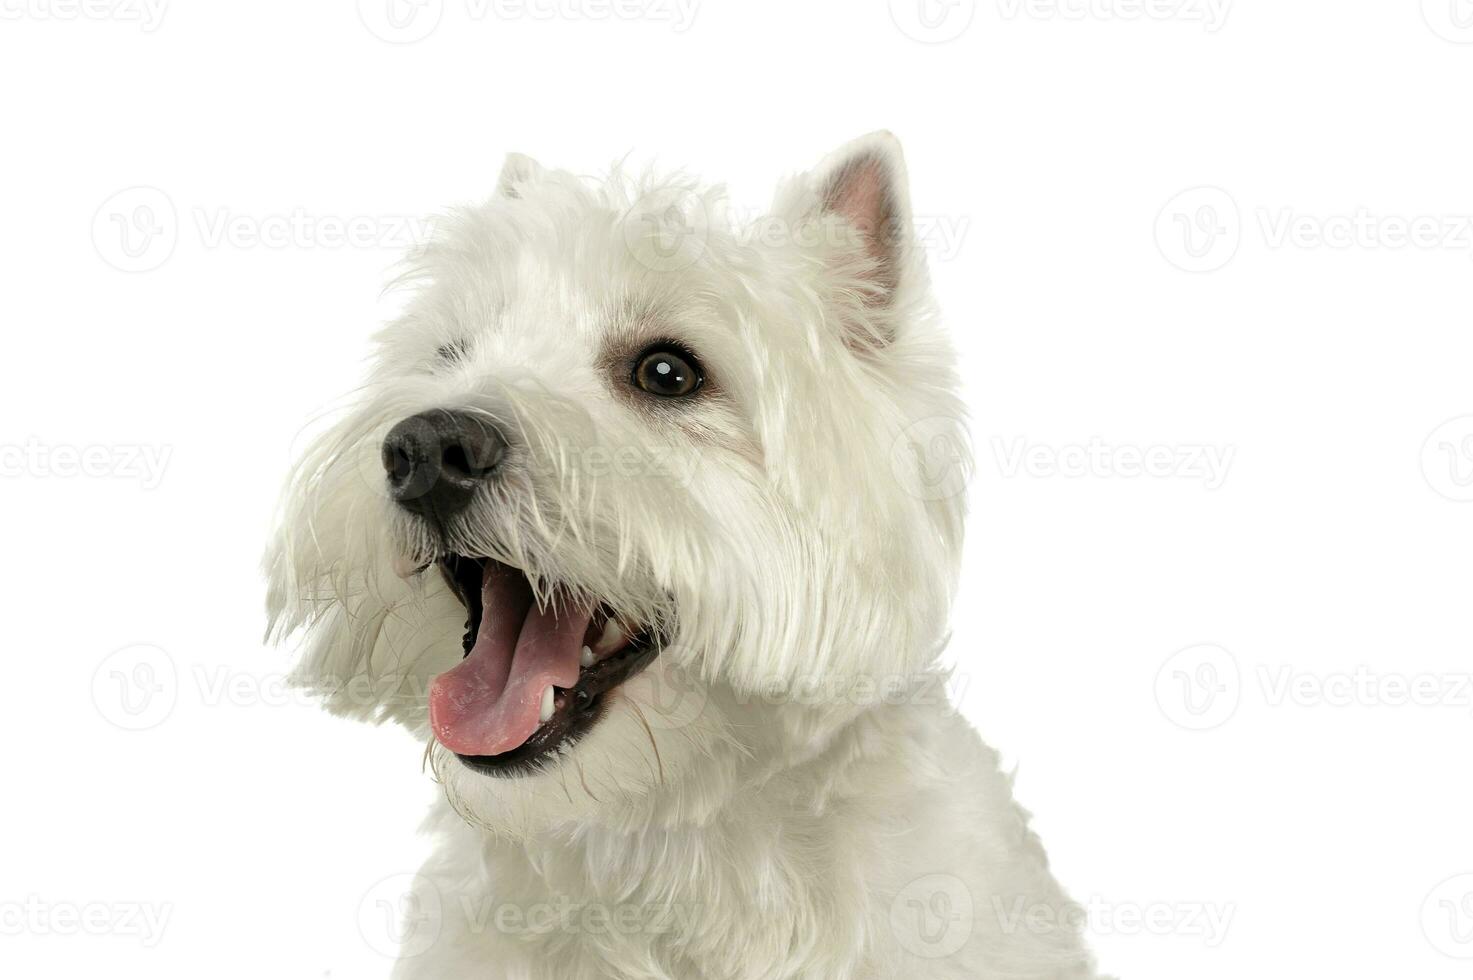 West Highland White Terrier portrait in a white studio photo